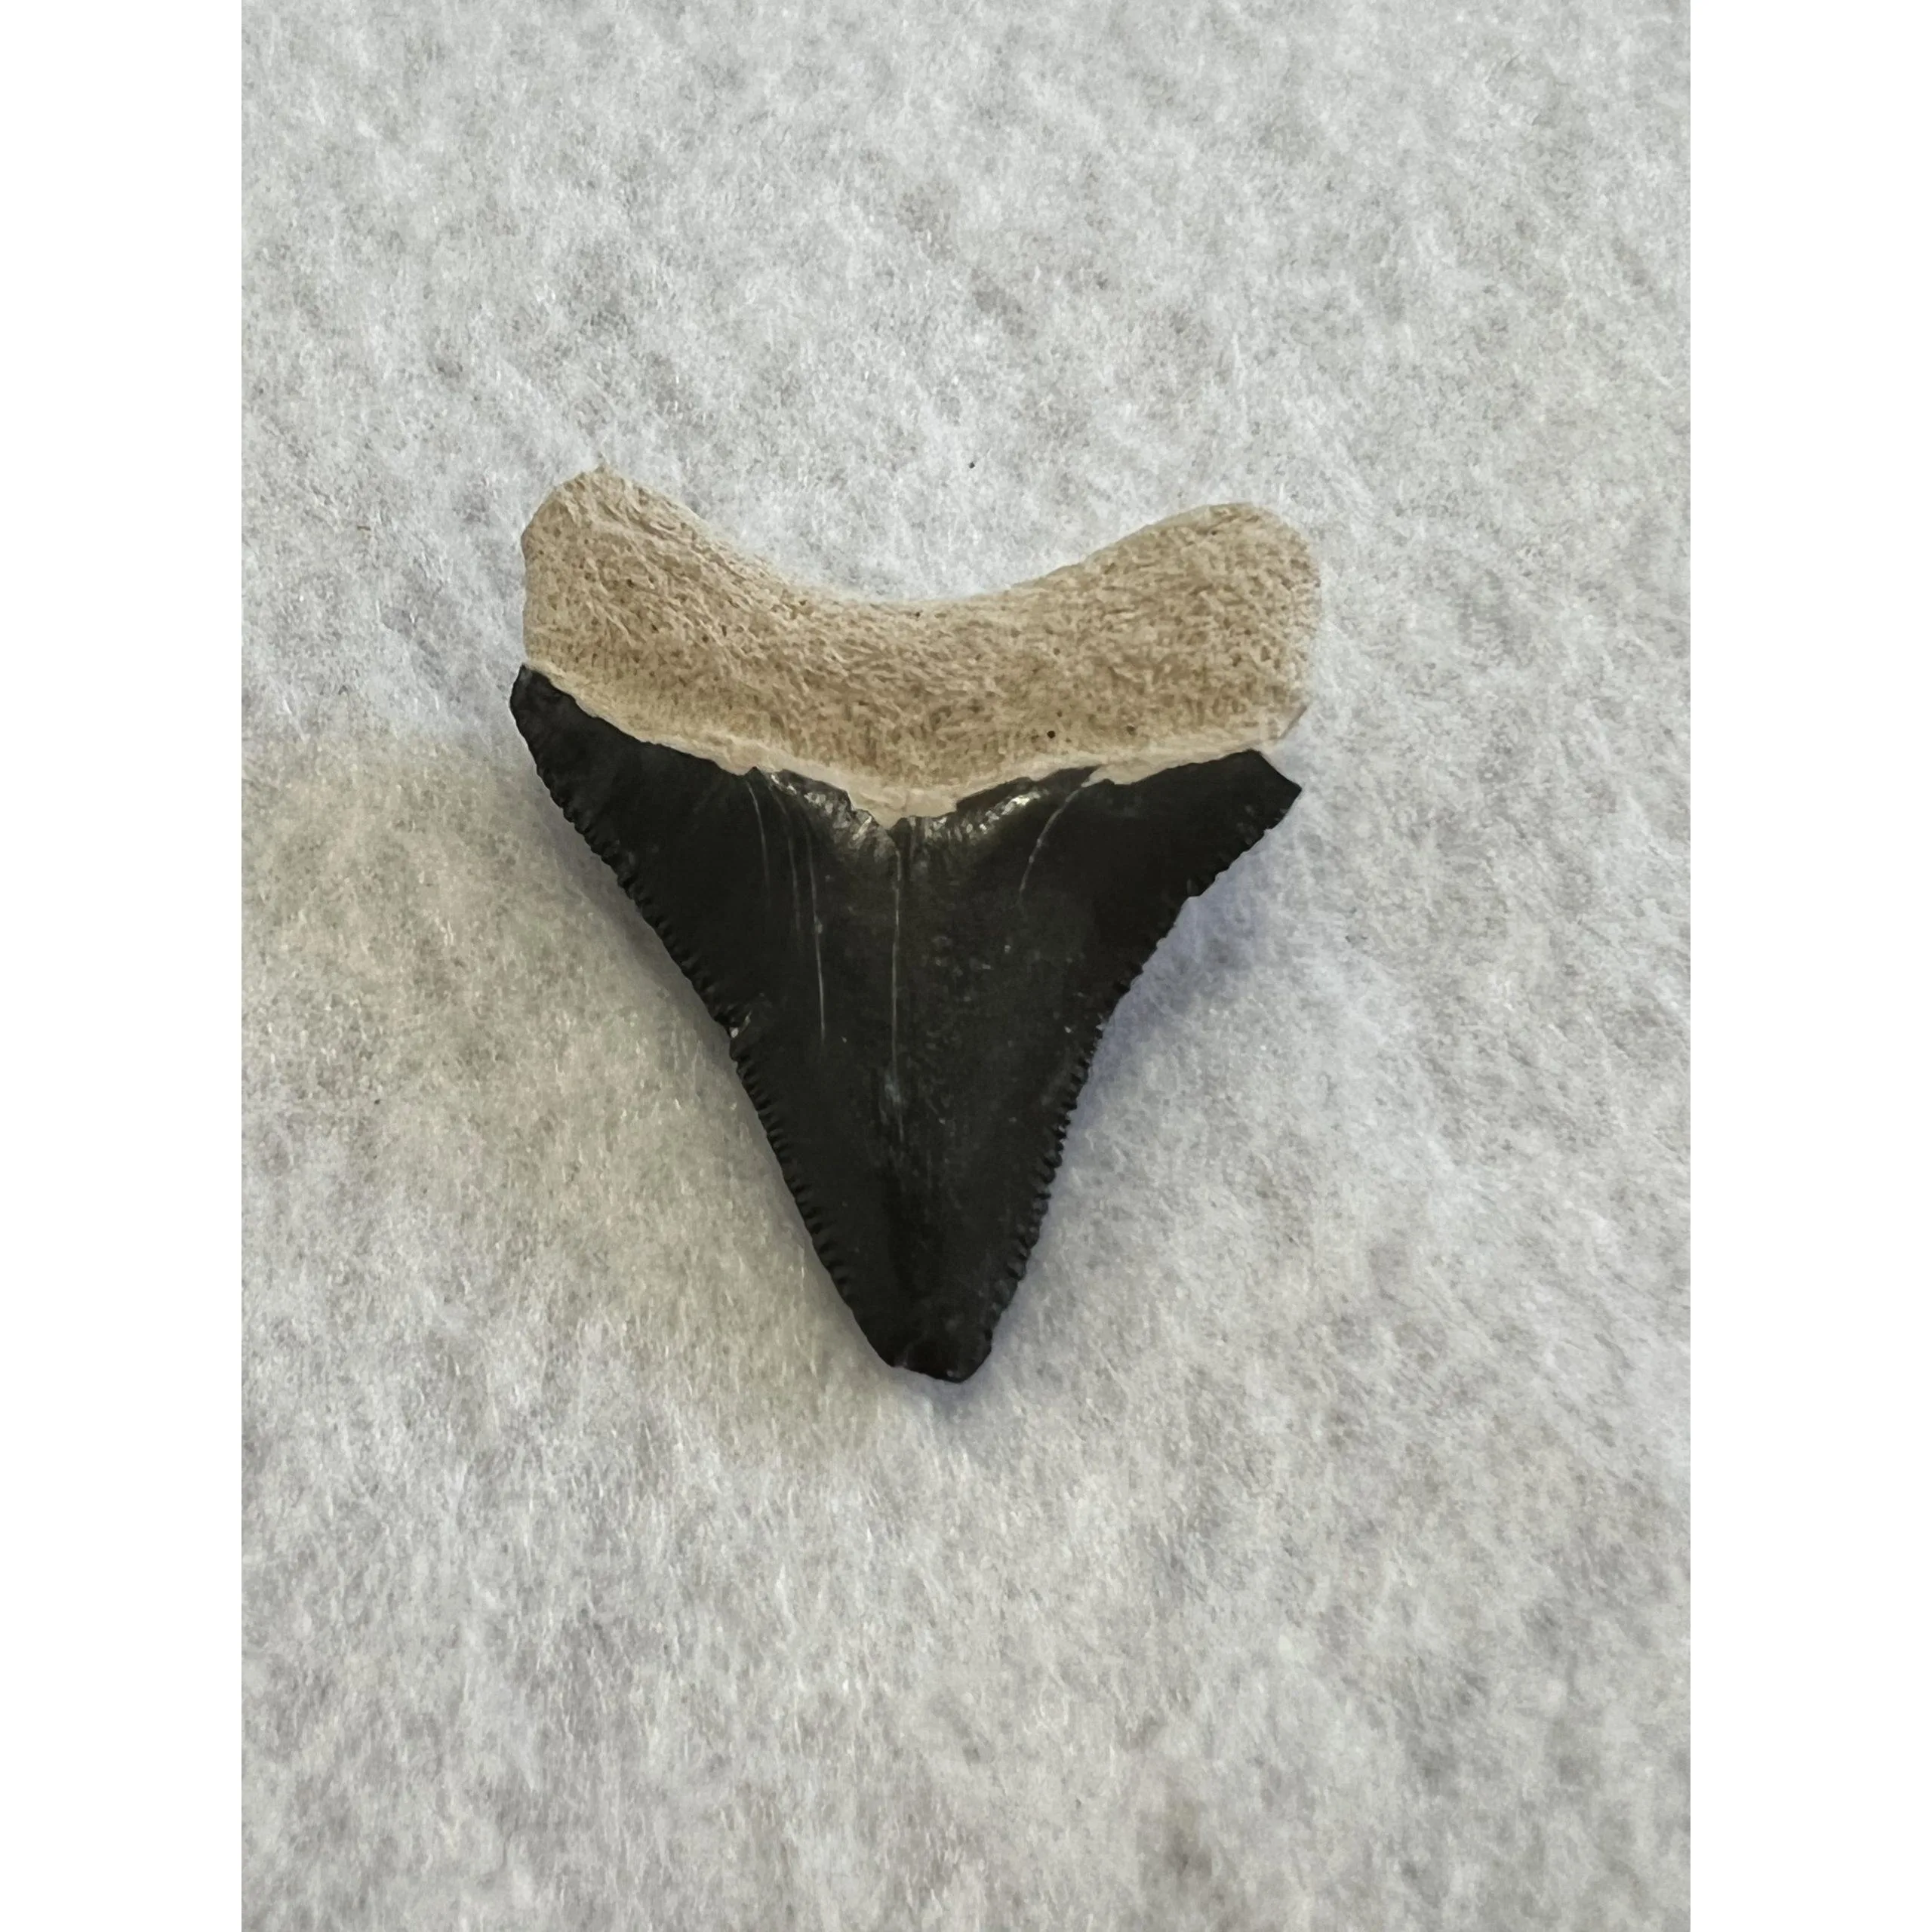 Megalodon Tooth, Bone Valley, Florida, 1.75 inch Prehistoric Online